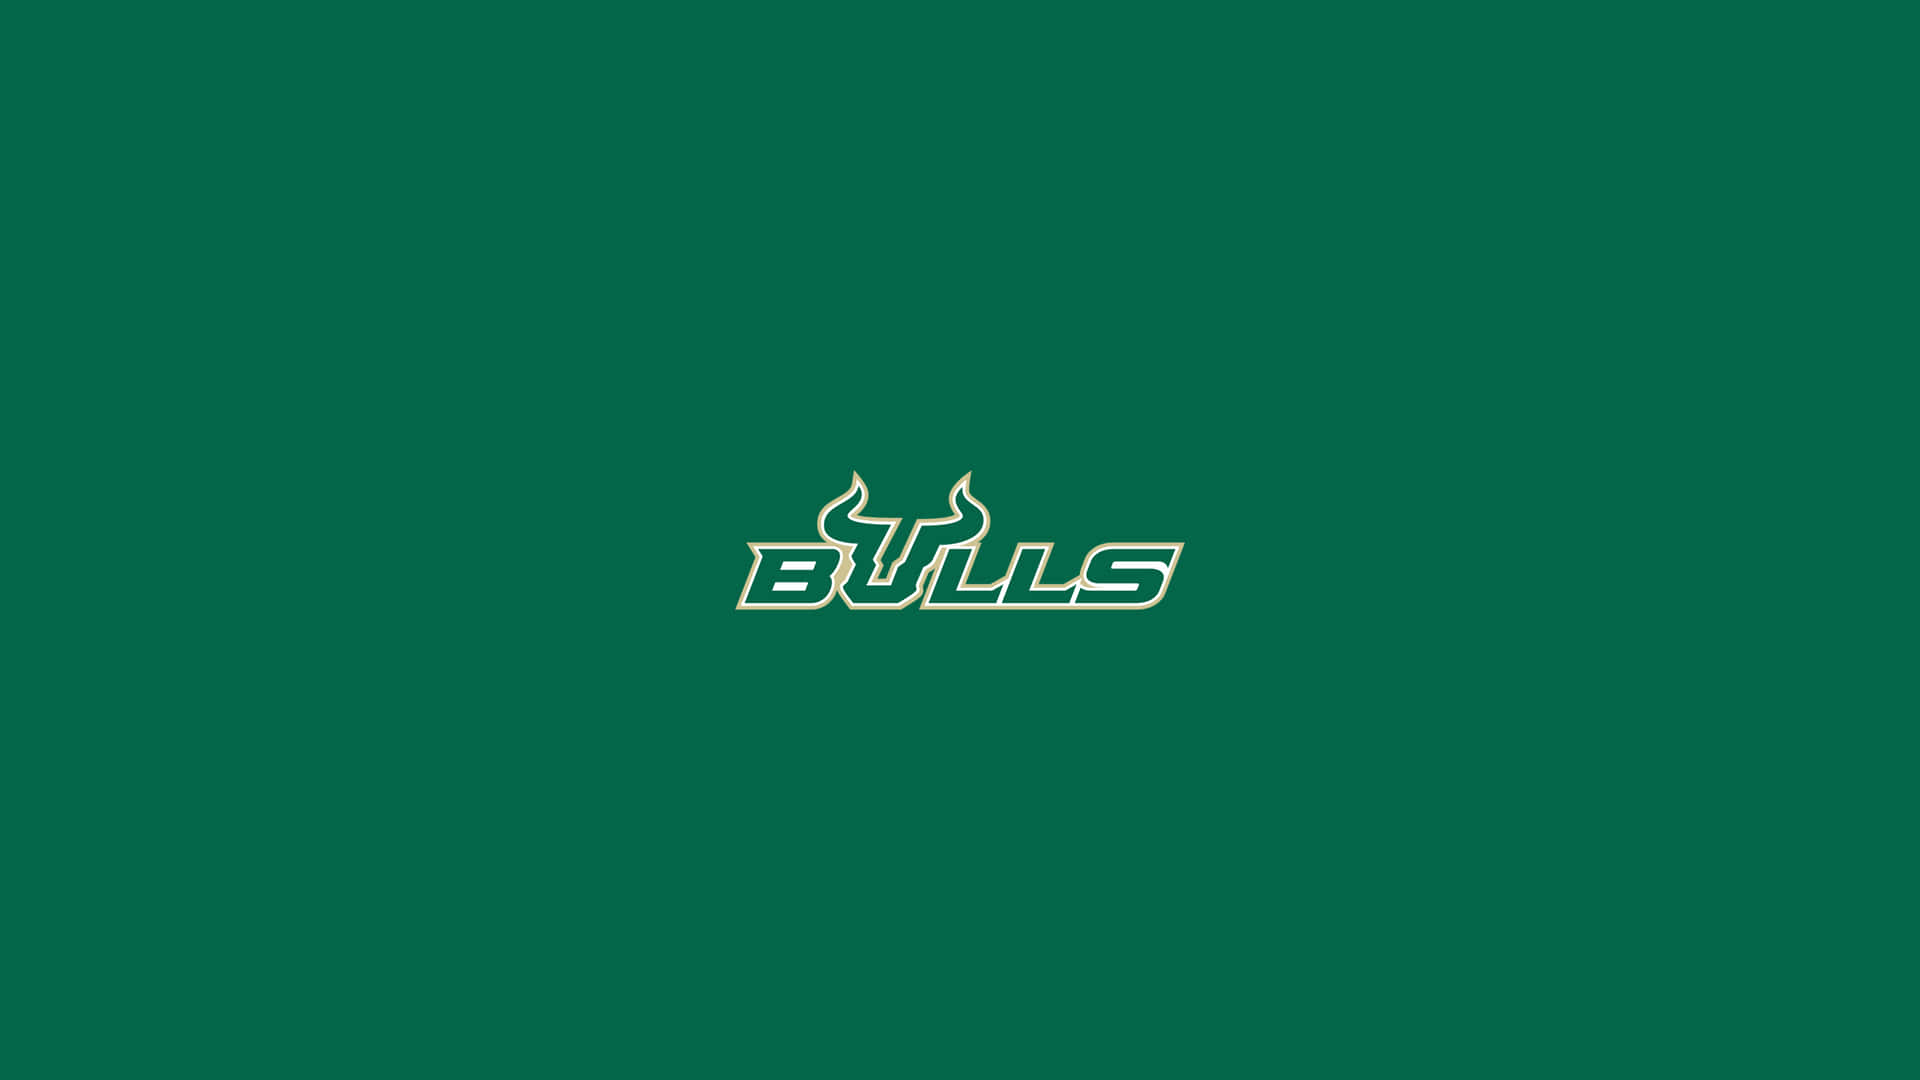 University Of South Florida Bulls Enkle Logo Wallpaper Wallpaper